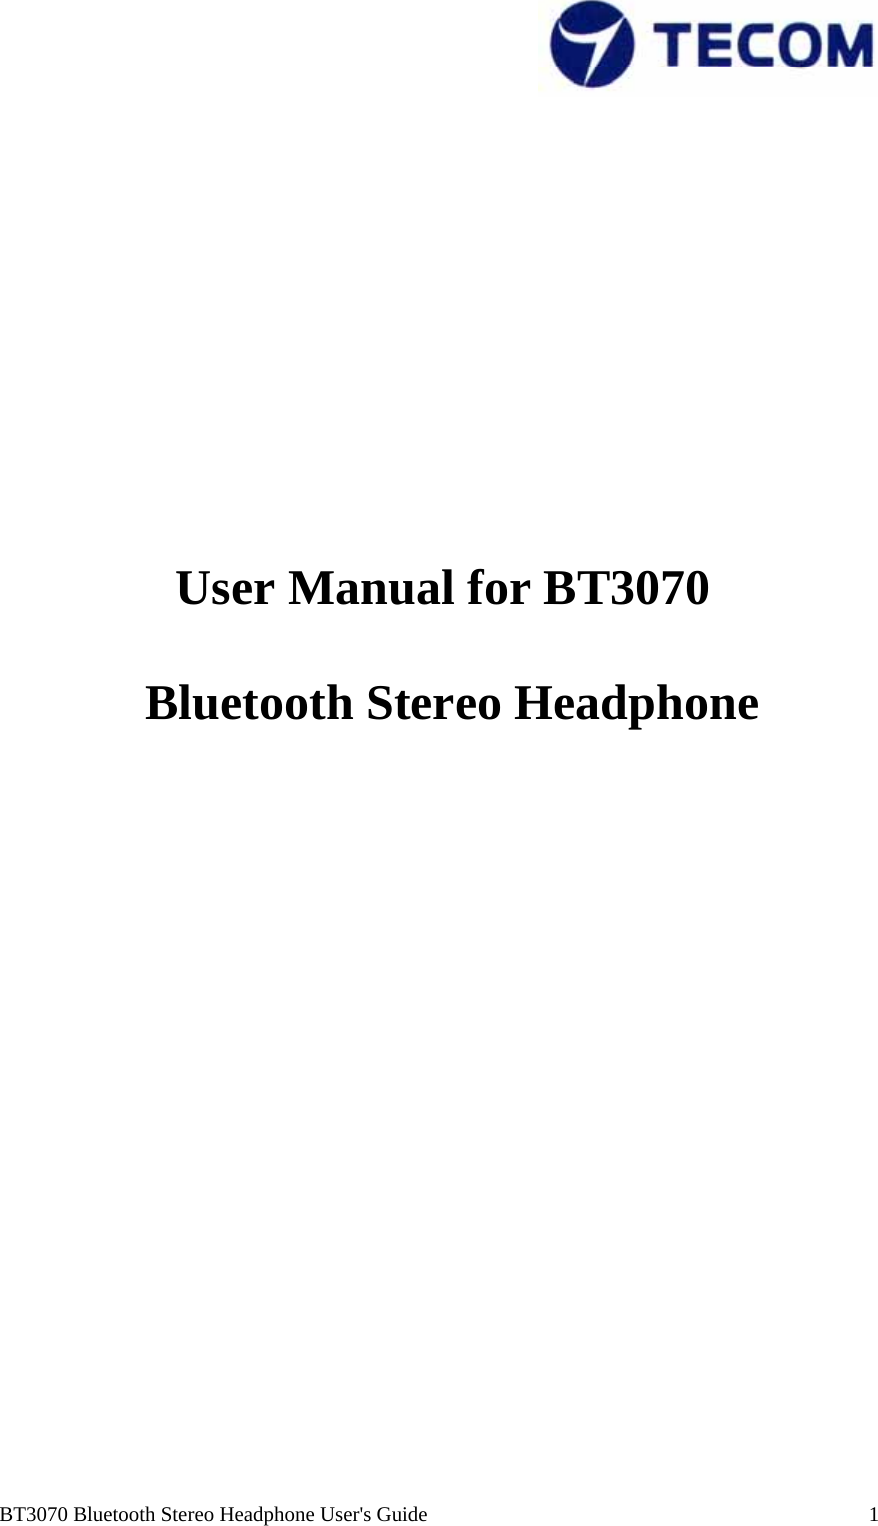  BT3070 Bluetooth Stereo Headphone User&apos;s Guide                                                                                    1             User Manual for BT3070  Bluetooth Stereo Headphone         